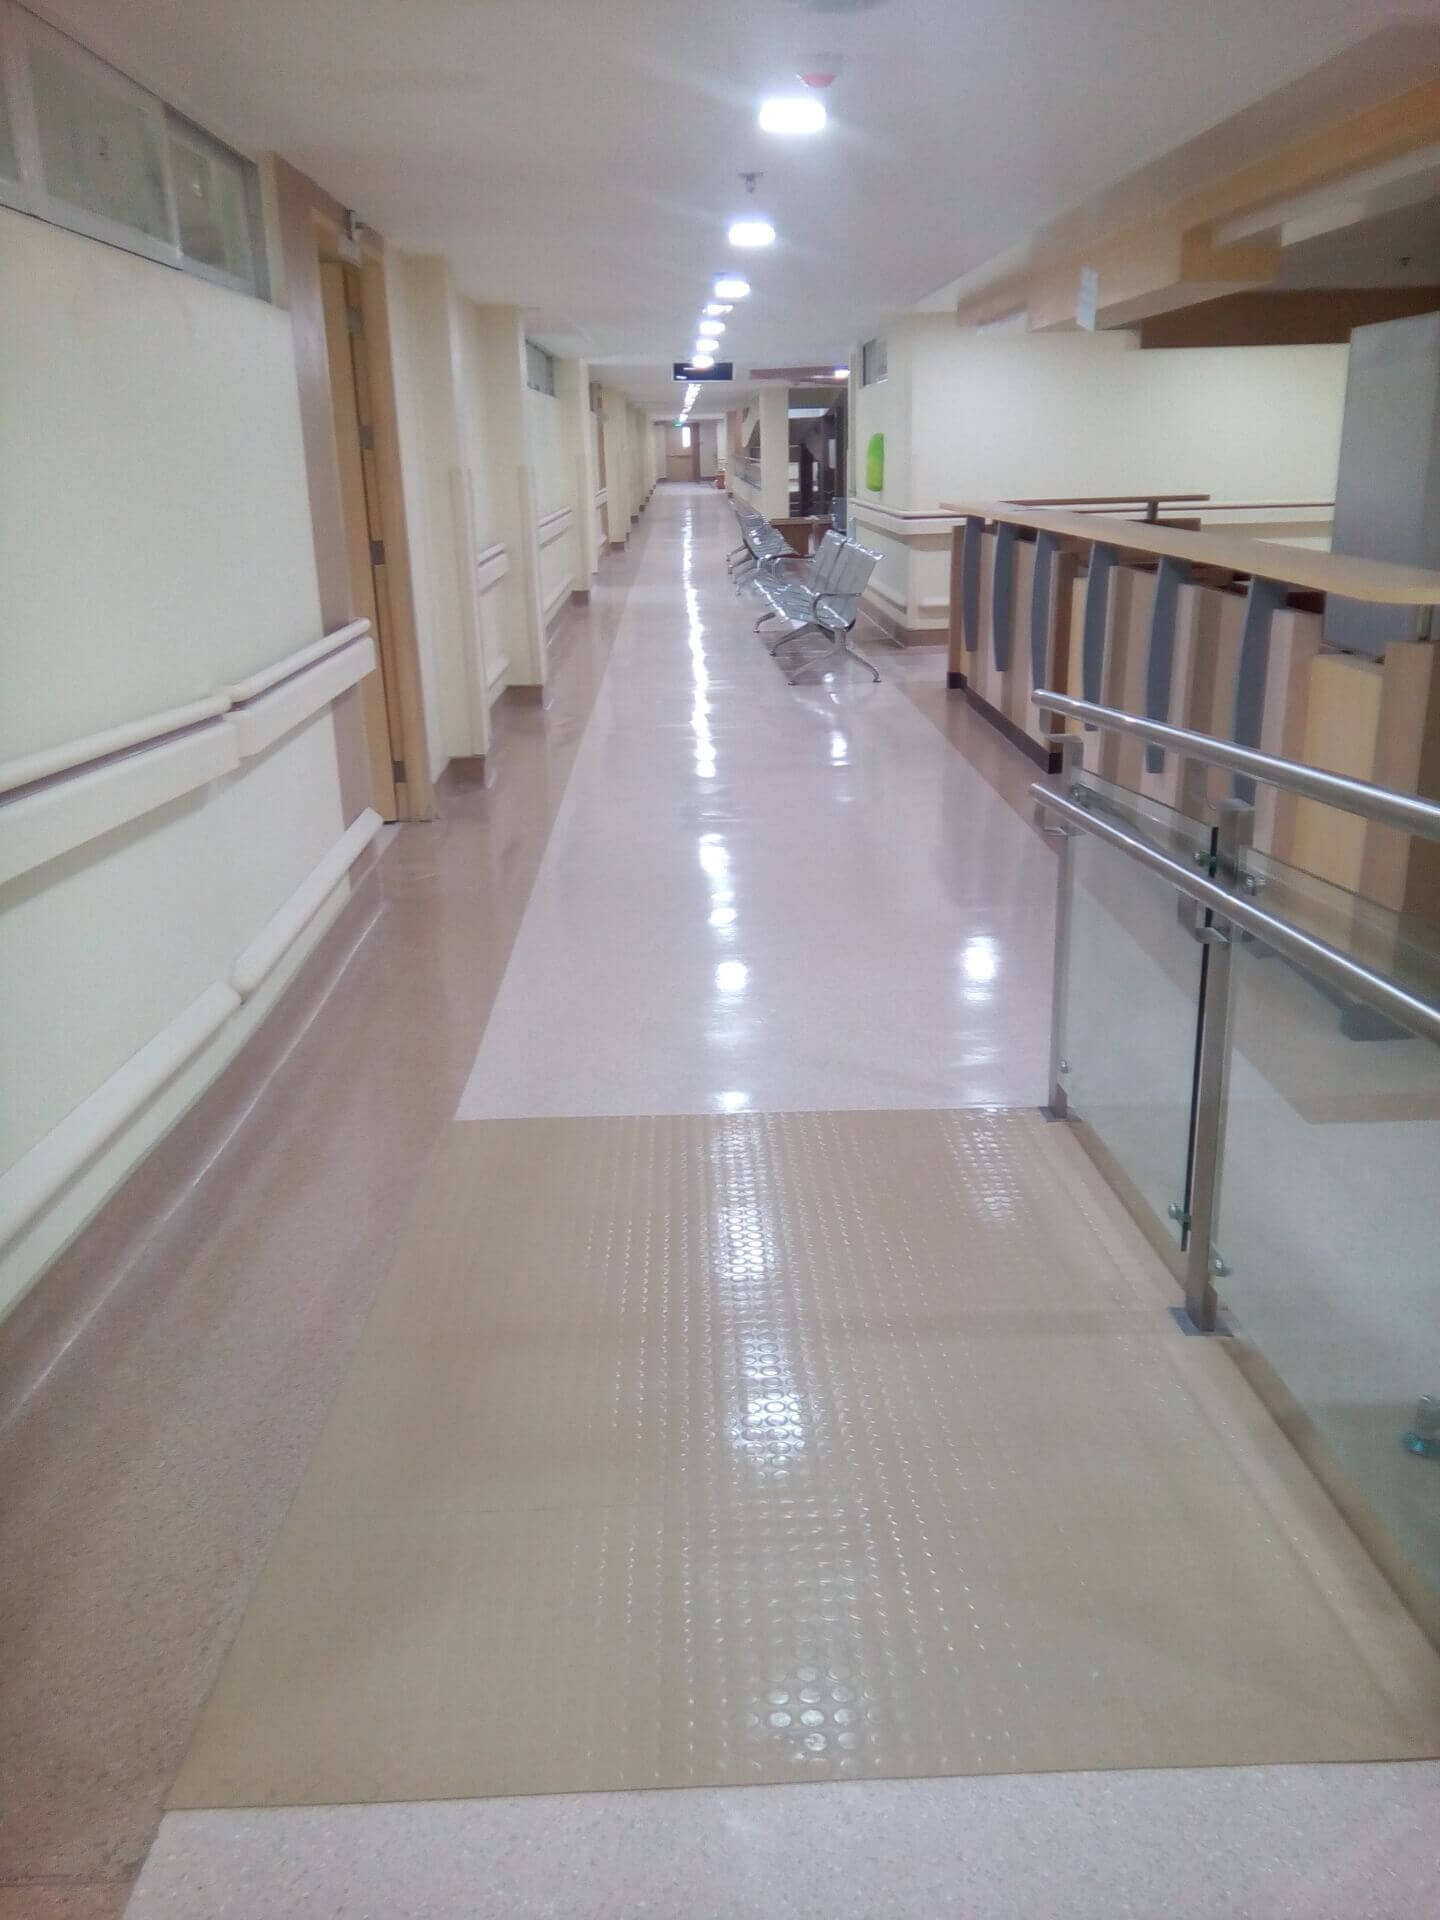 Pasig city general hospital.jpg 1